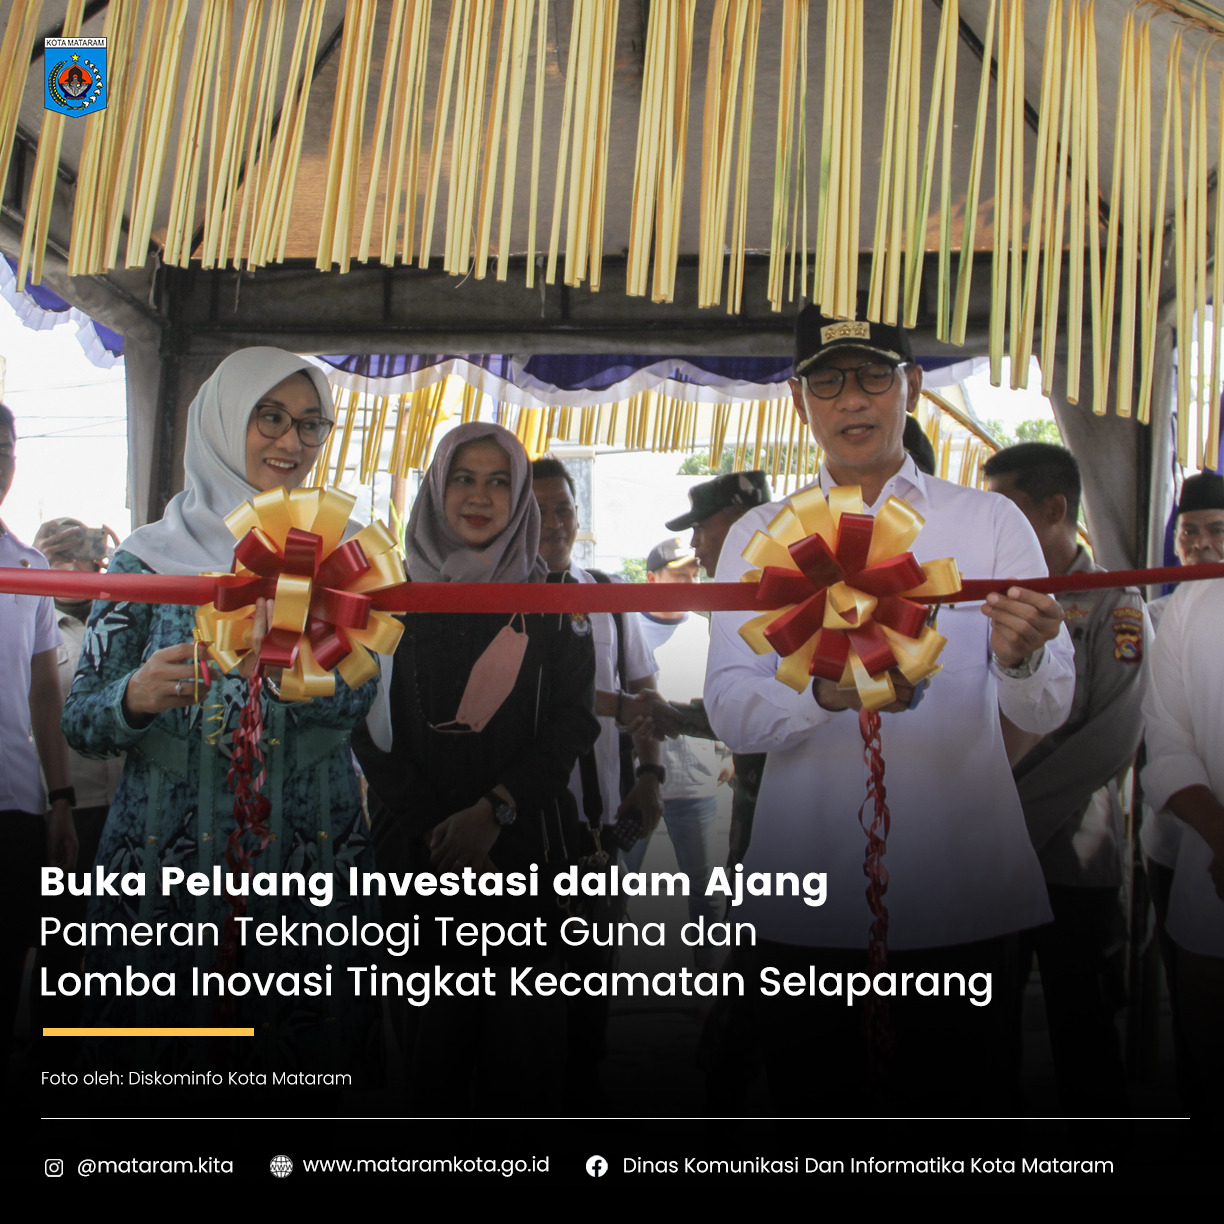 Buka peluang Investasi dalam ajang pameran TTG dan Lomba Inovasi Tingkat Kecamatan Selaparang